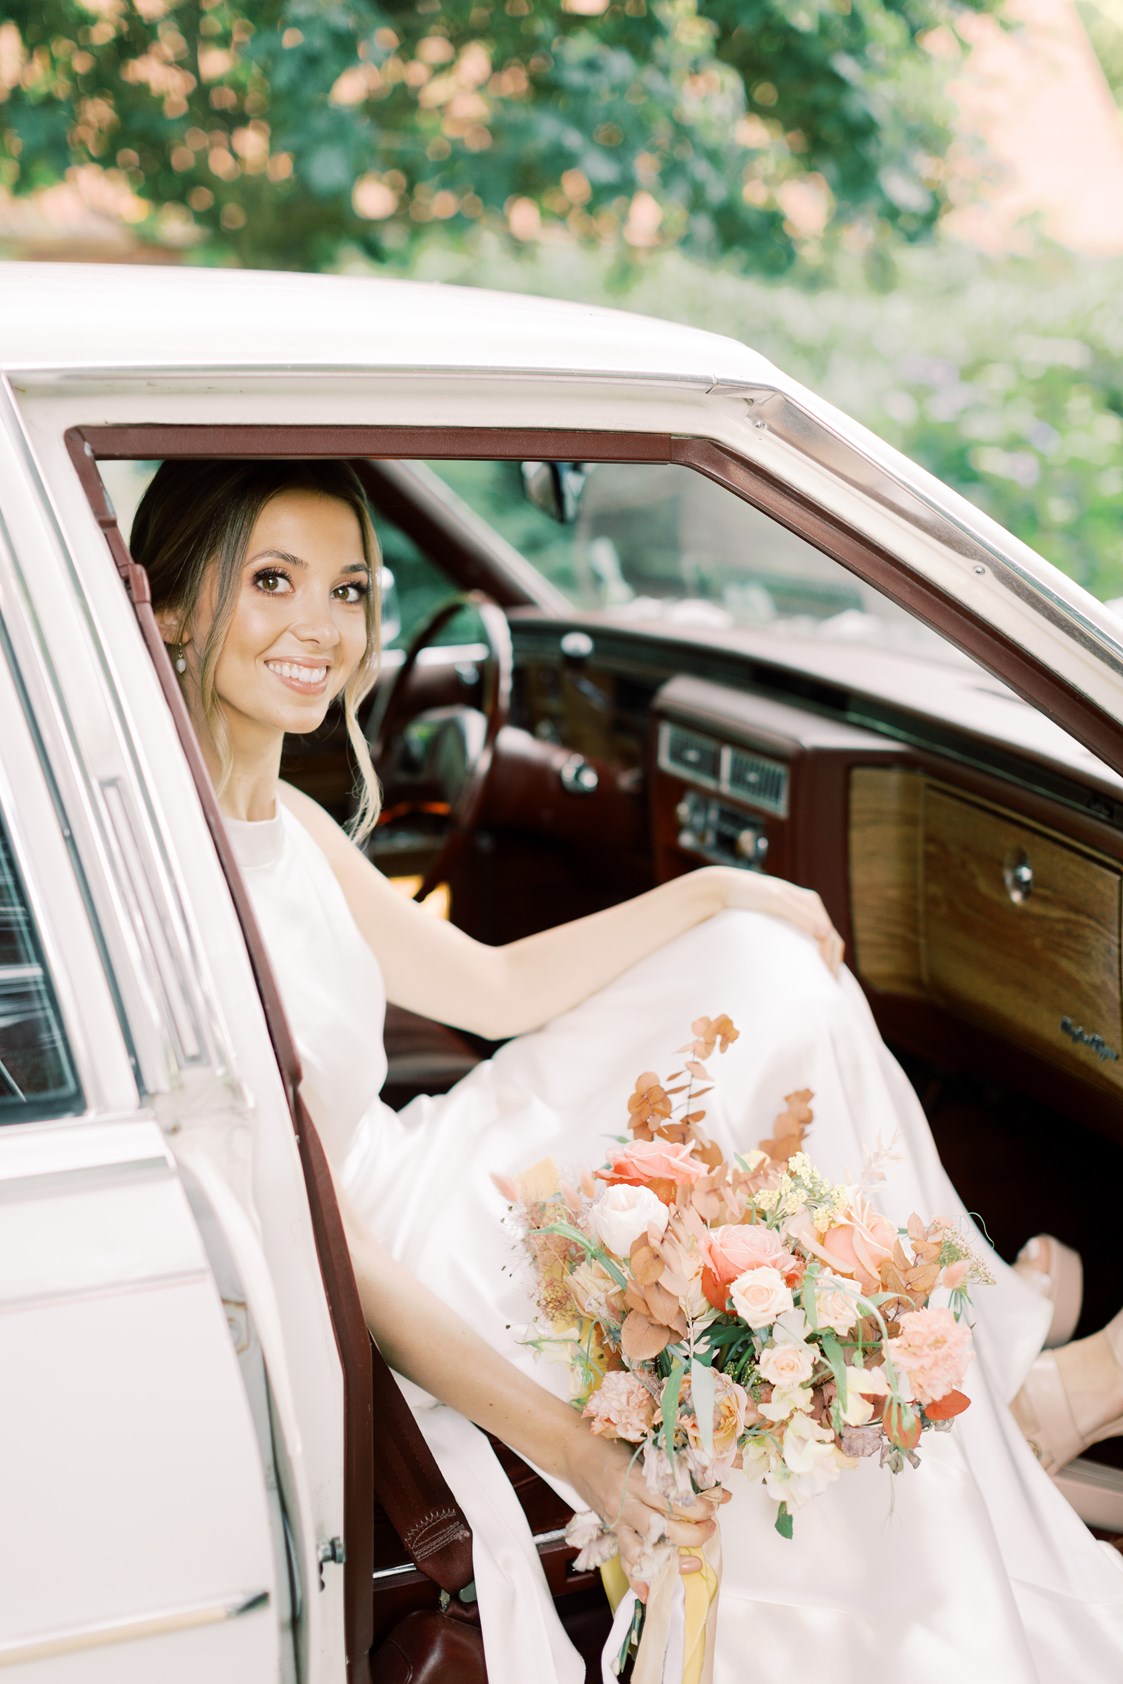 Hochzeitsauto: Cadillac Fleetwood Brougham